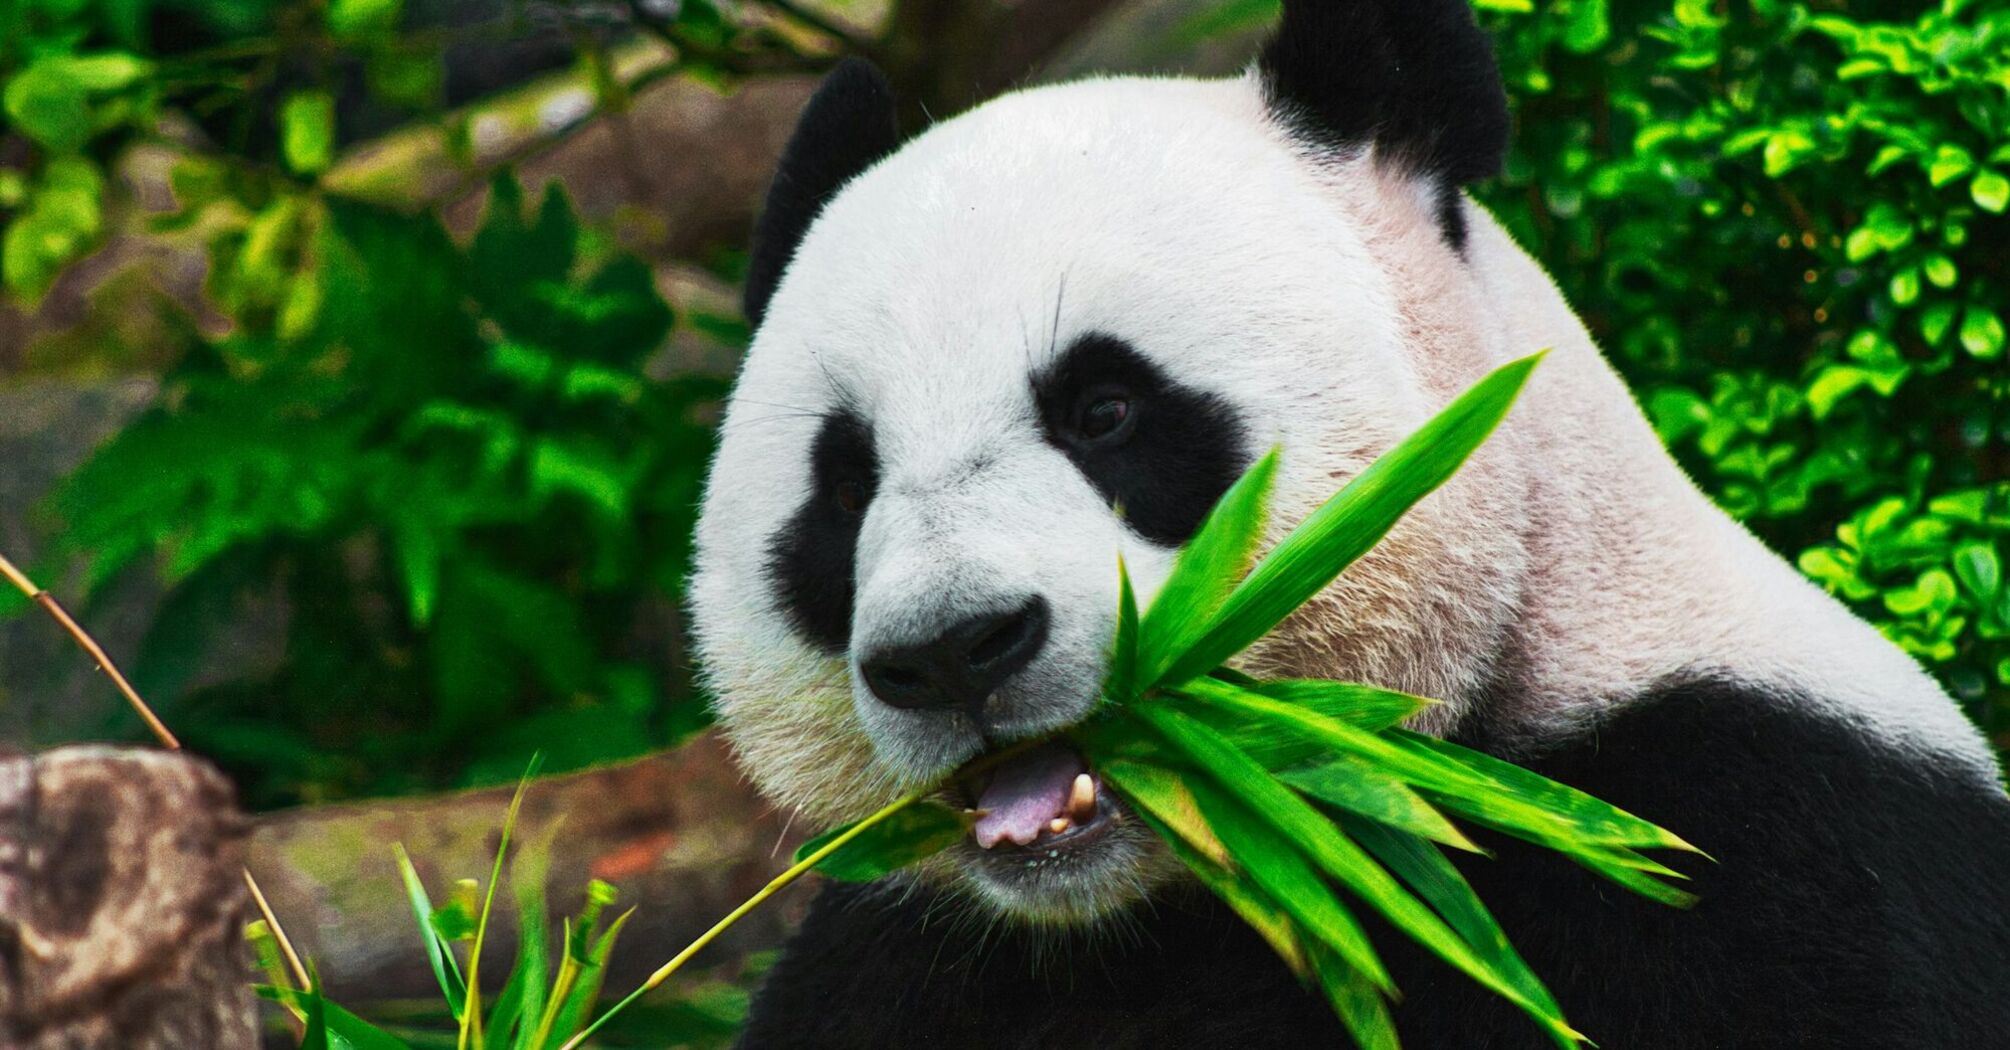 Baby panda eating bamboo leaves